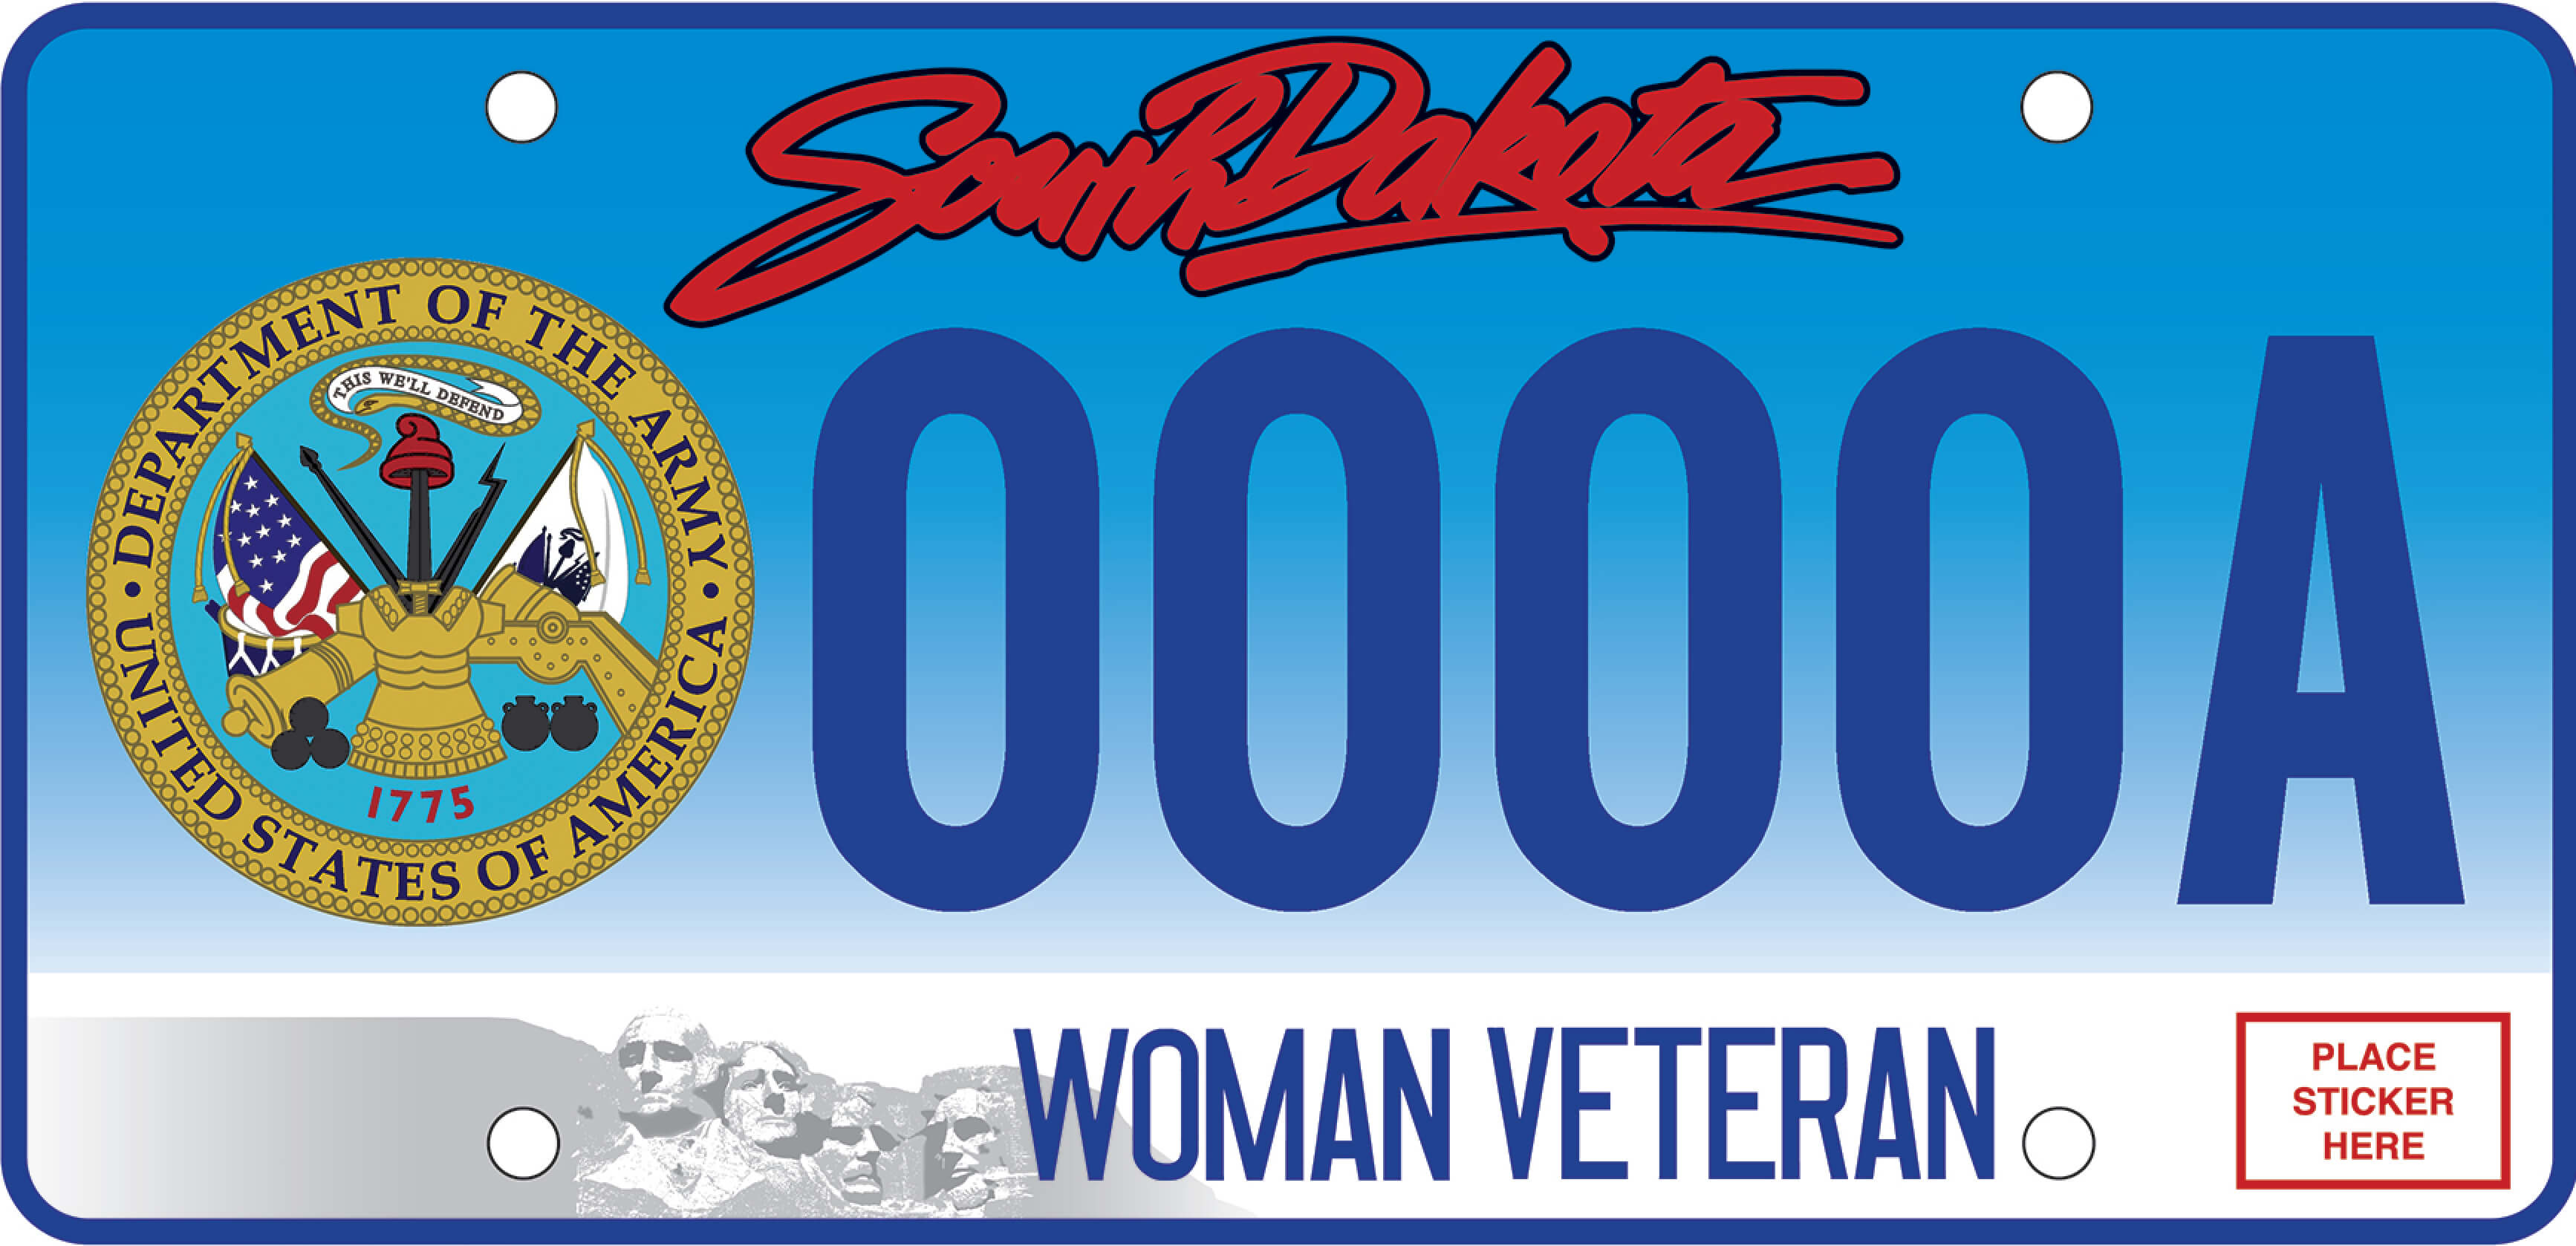 Woman Veteran Army Plate